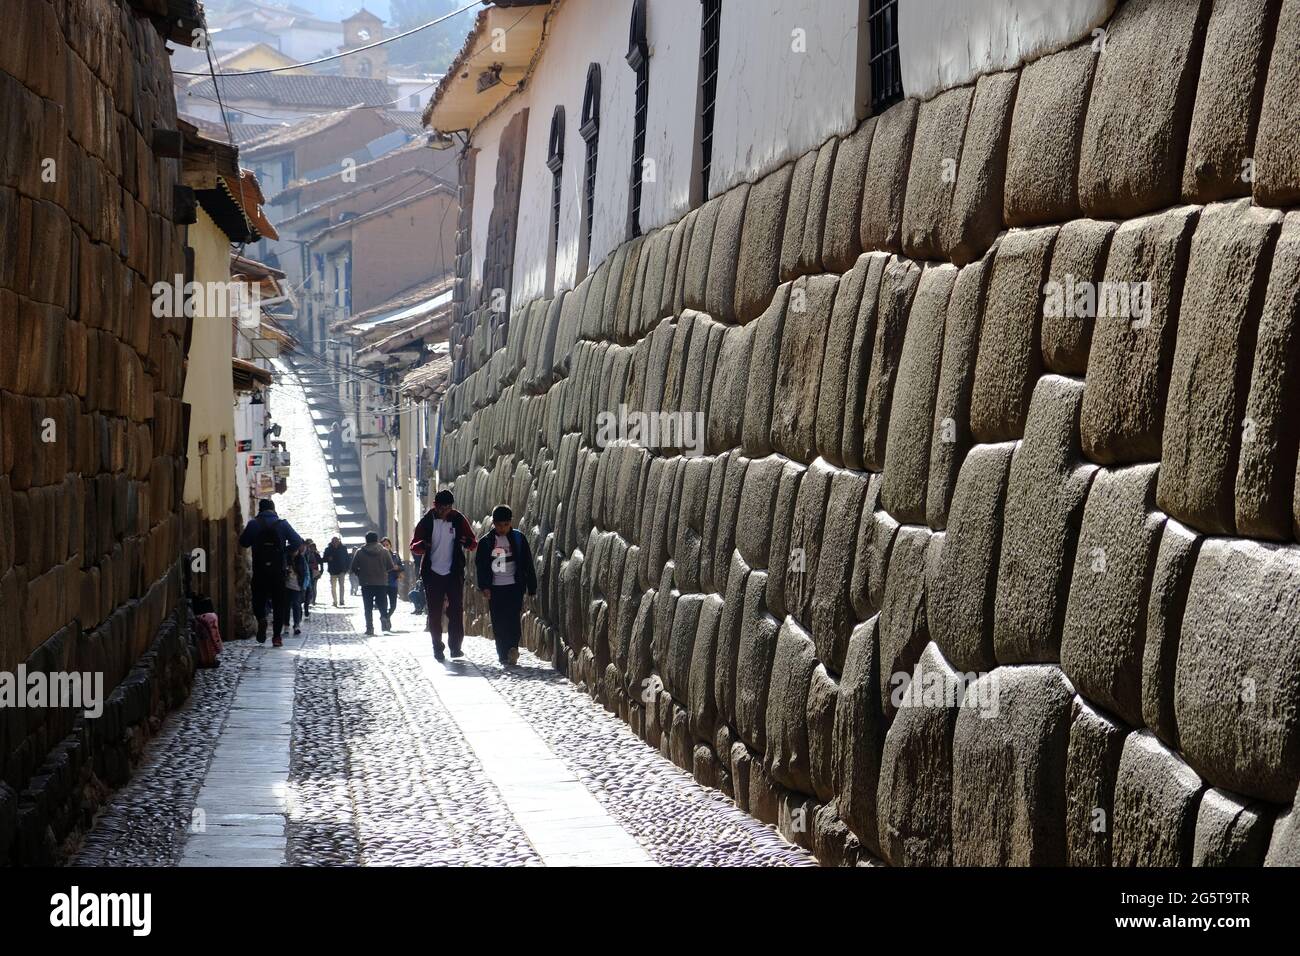 Pérou Cusco - Piedra de los 12 angulos - Twelve Angled Stone mur vue sur la rue Banque D'Images